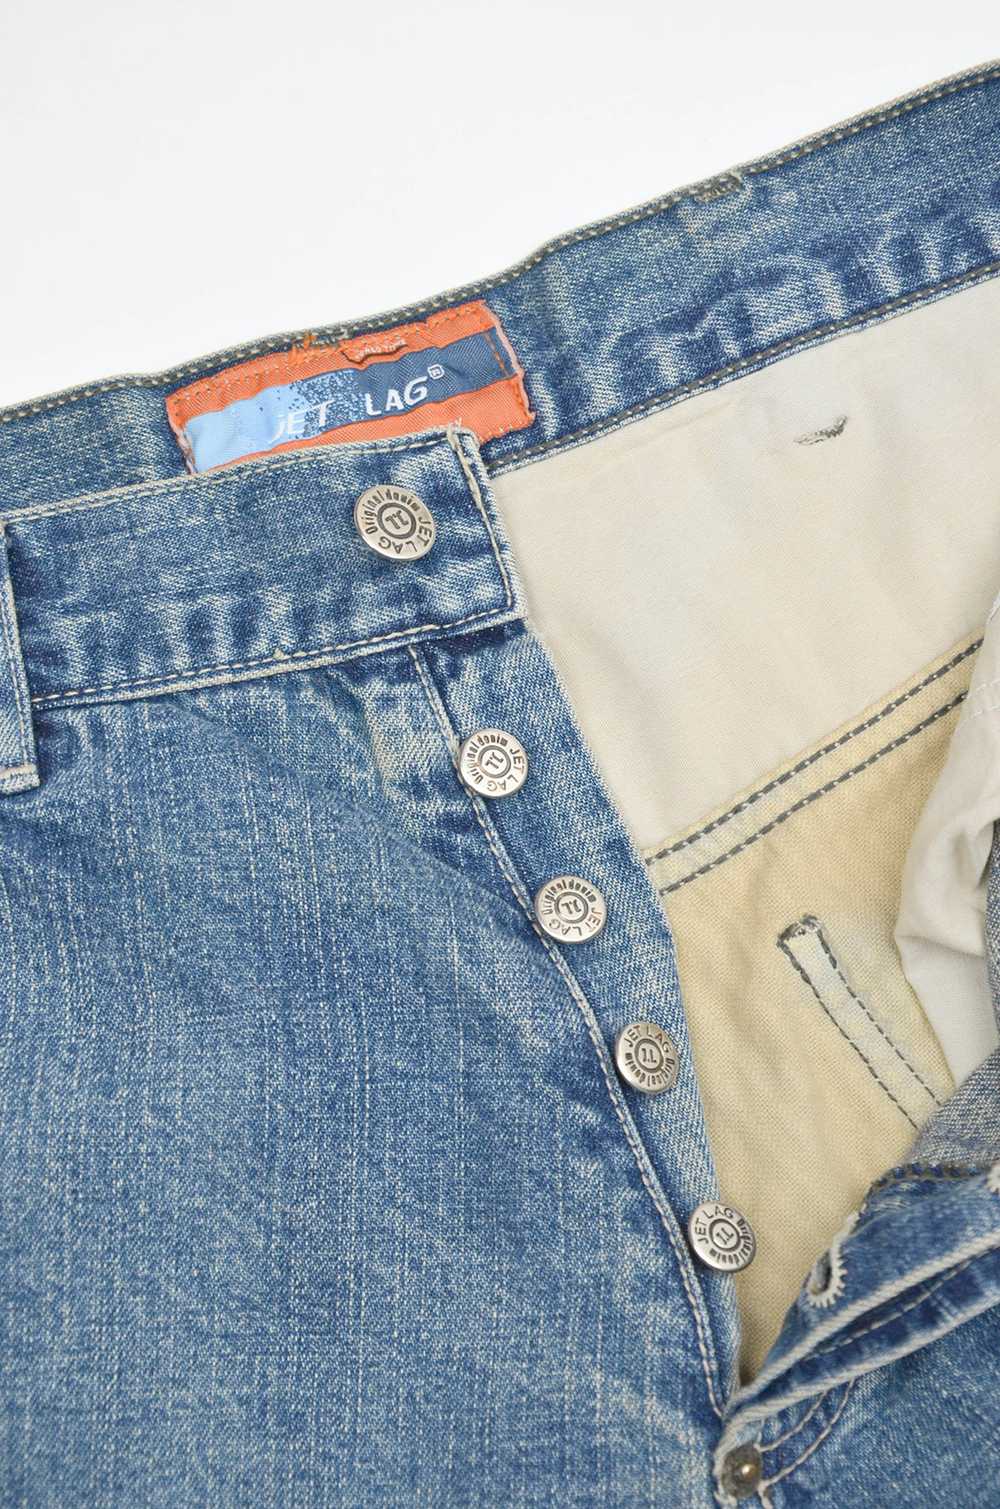 Jet Lag JET LAG Vintage Half Corduroy Jeans - image 6